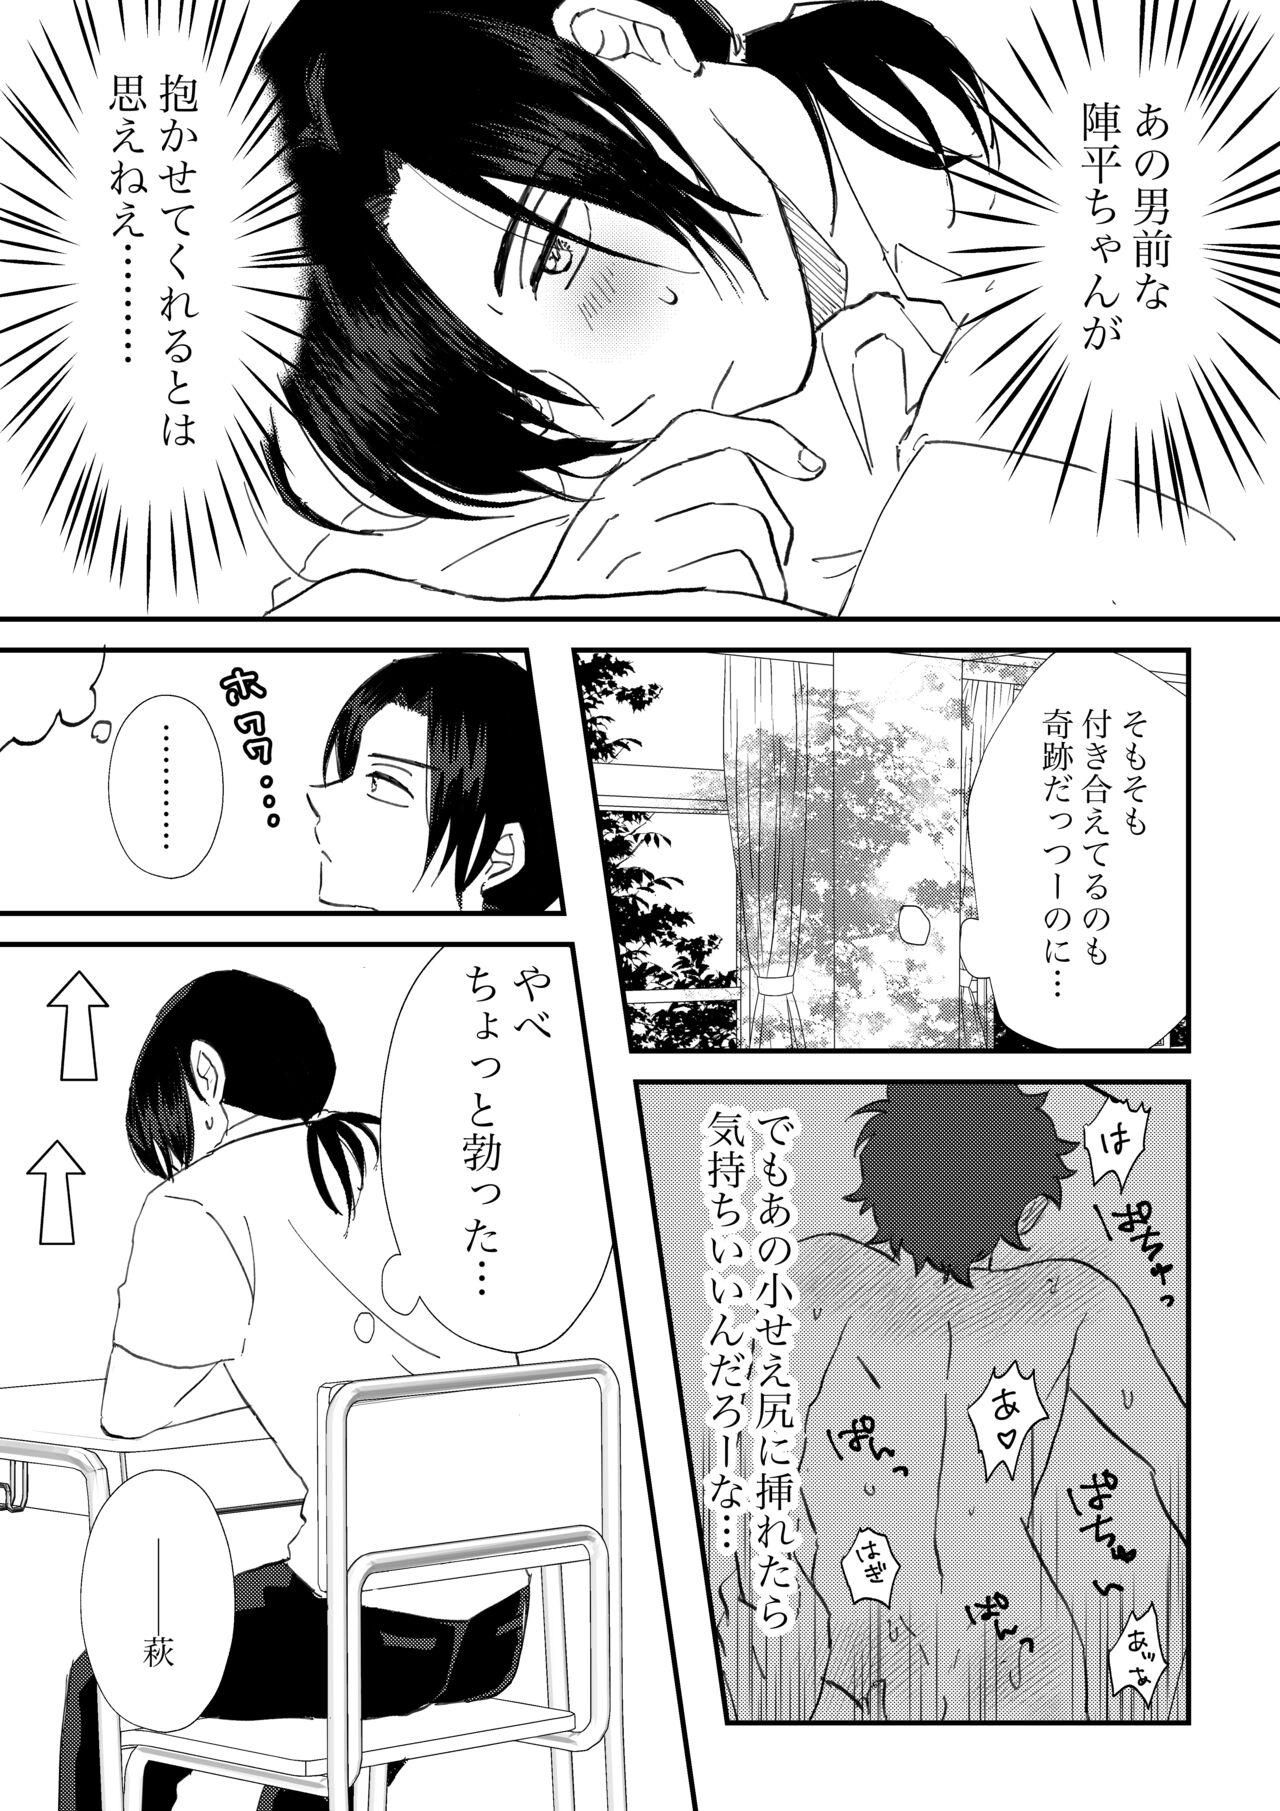 Weird All because of summer - Detective conan | meitantei conan Large - Page 6